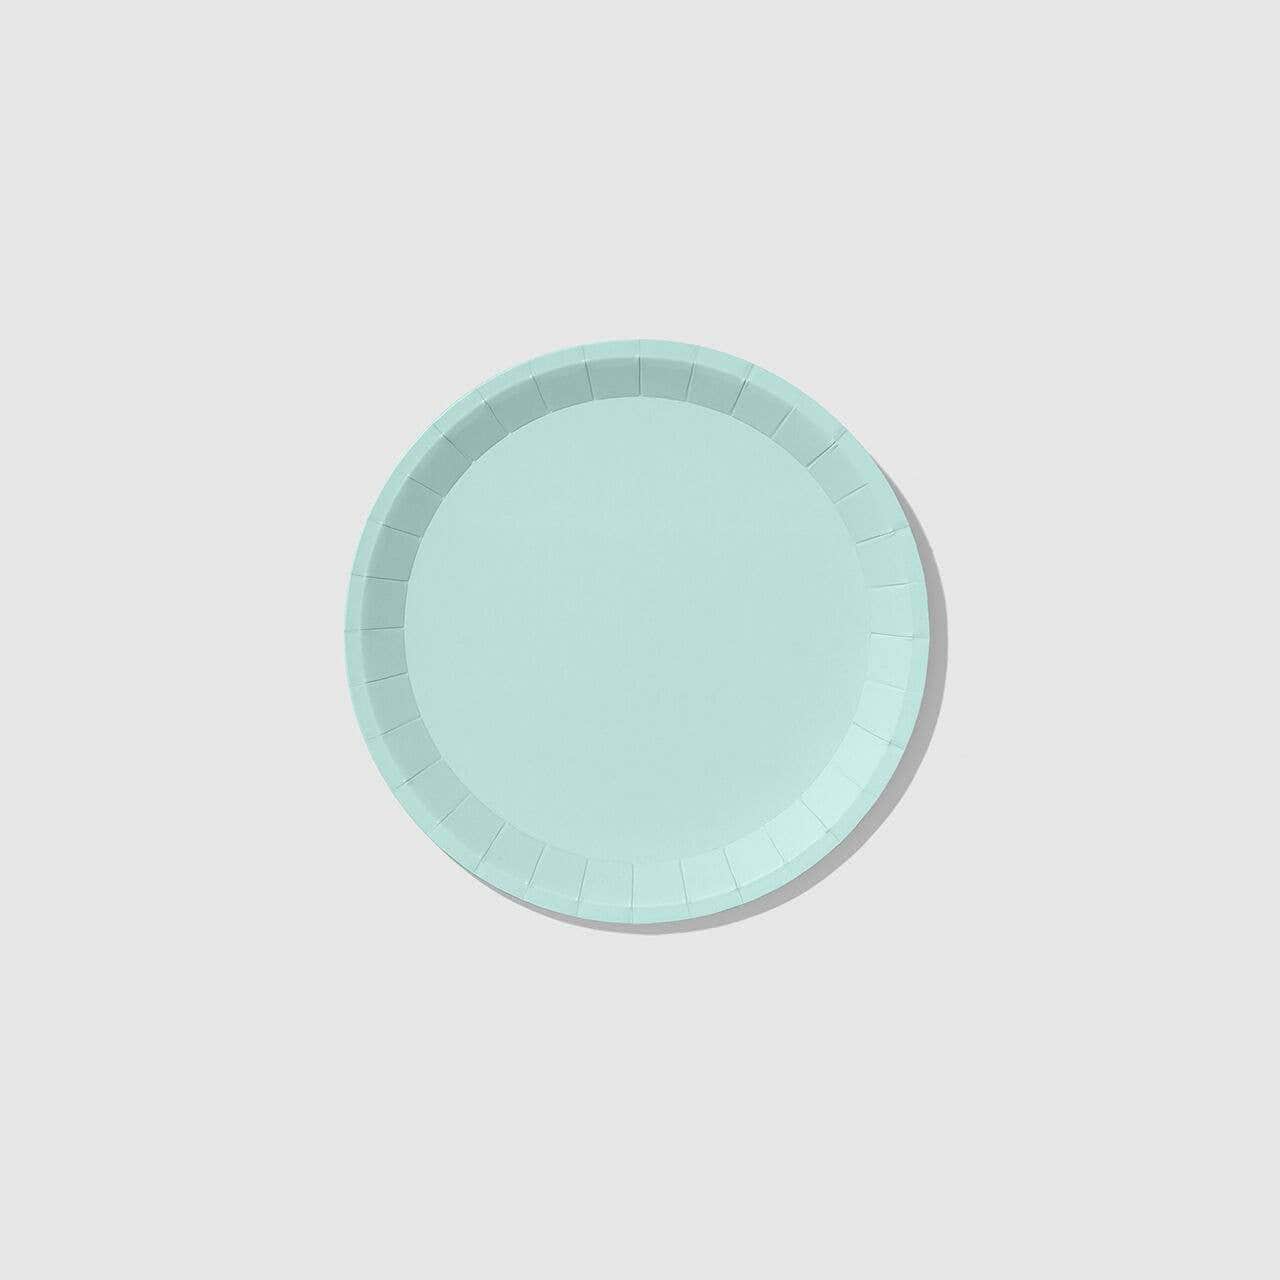 Mint green blue paper plate